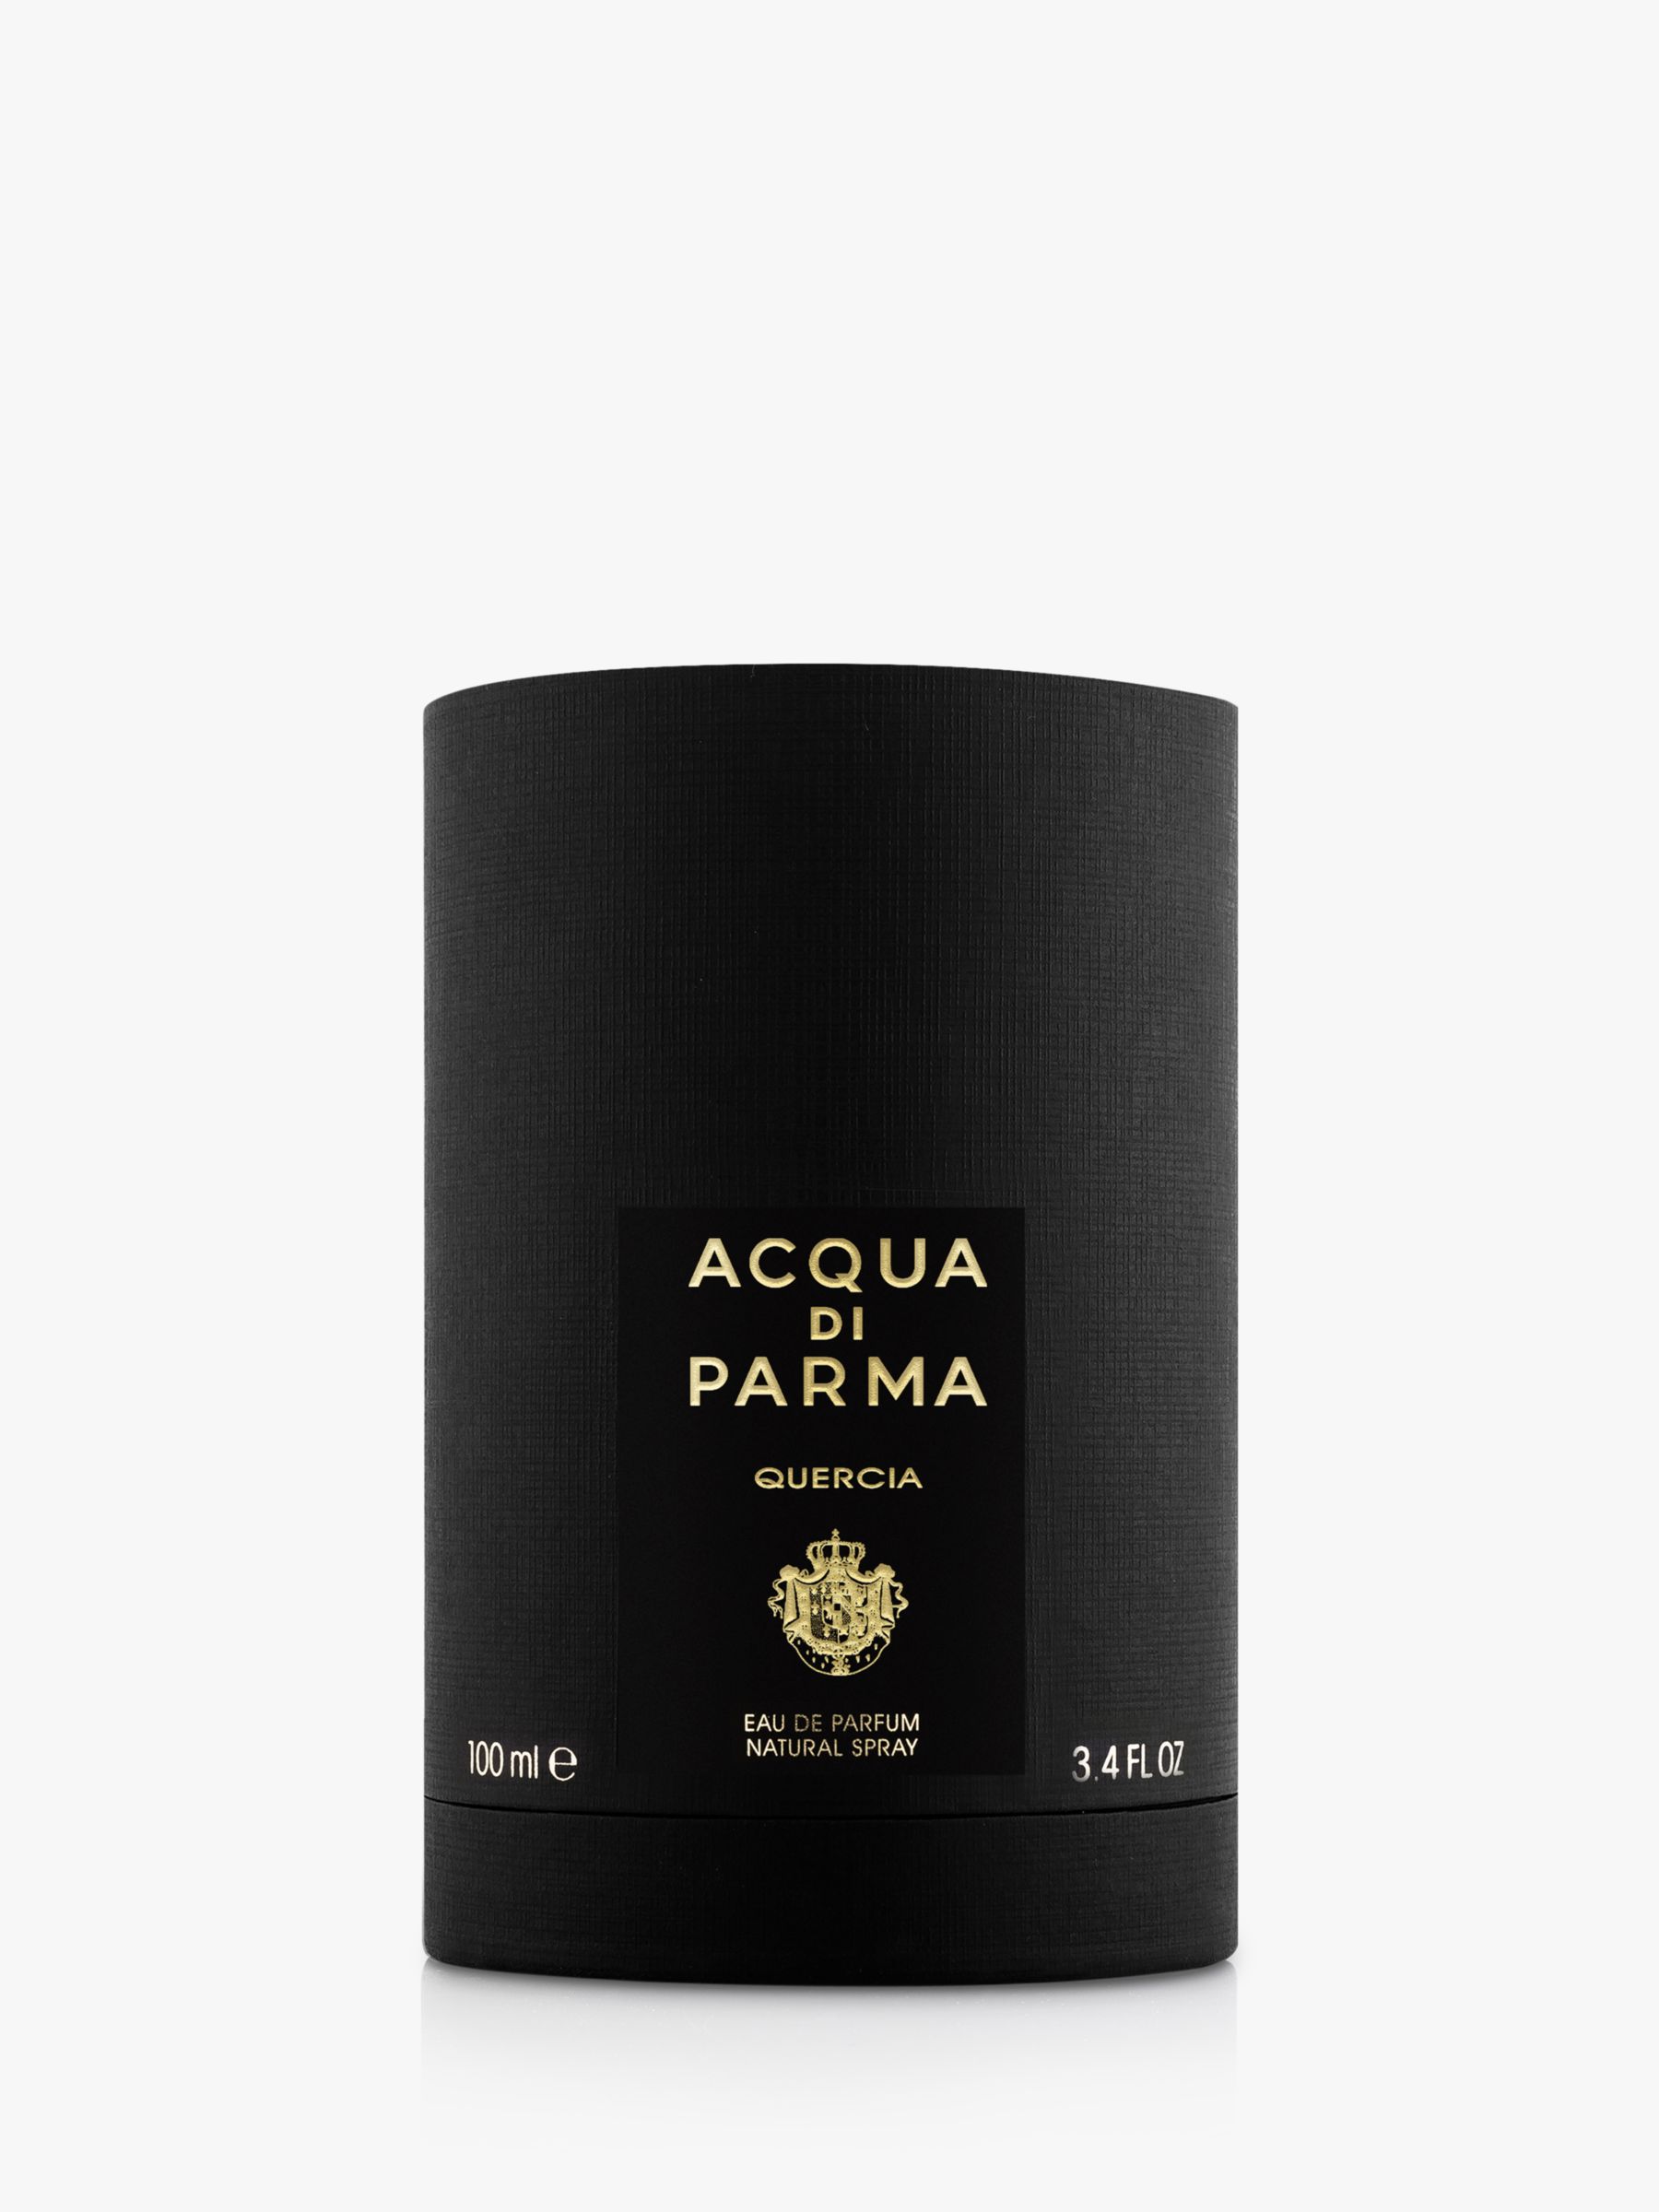 Acqua di Parma Quercia Eau de Parfum, 100ml